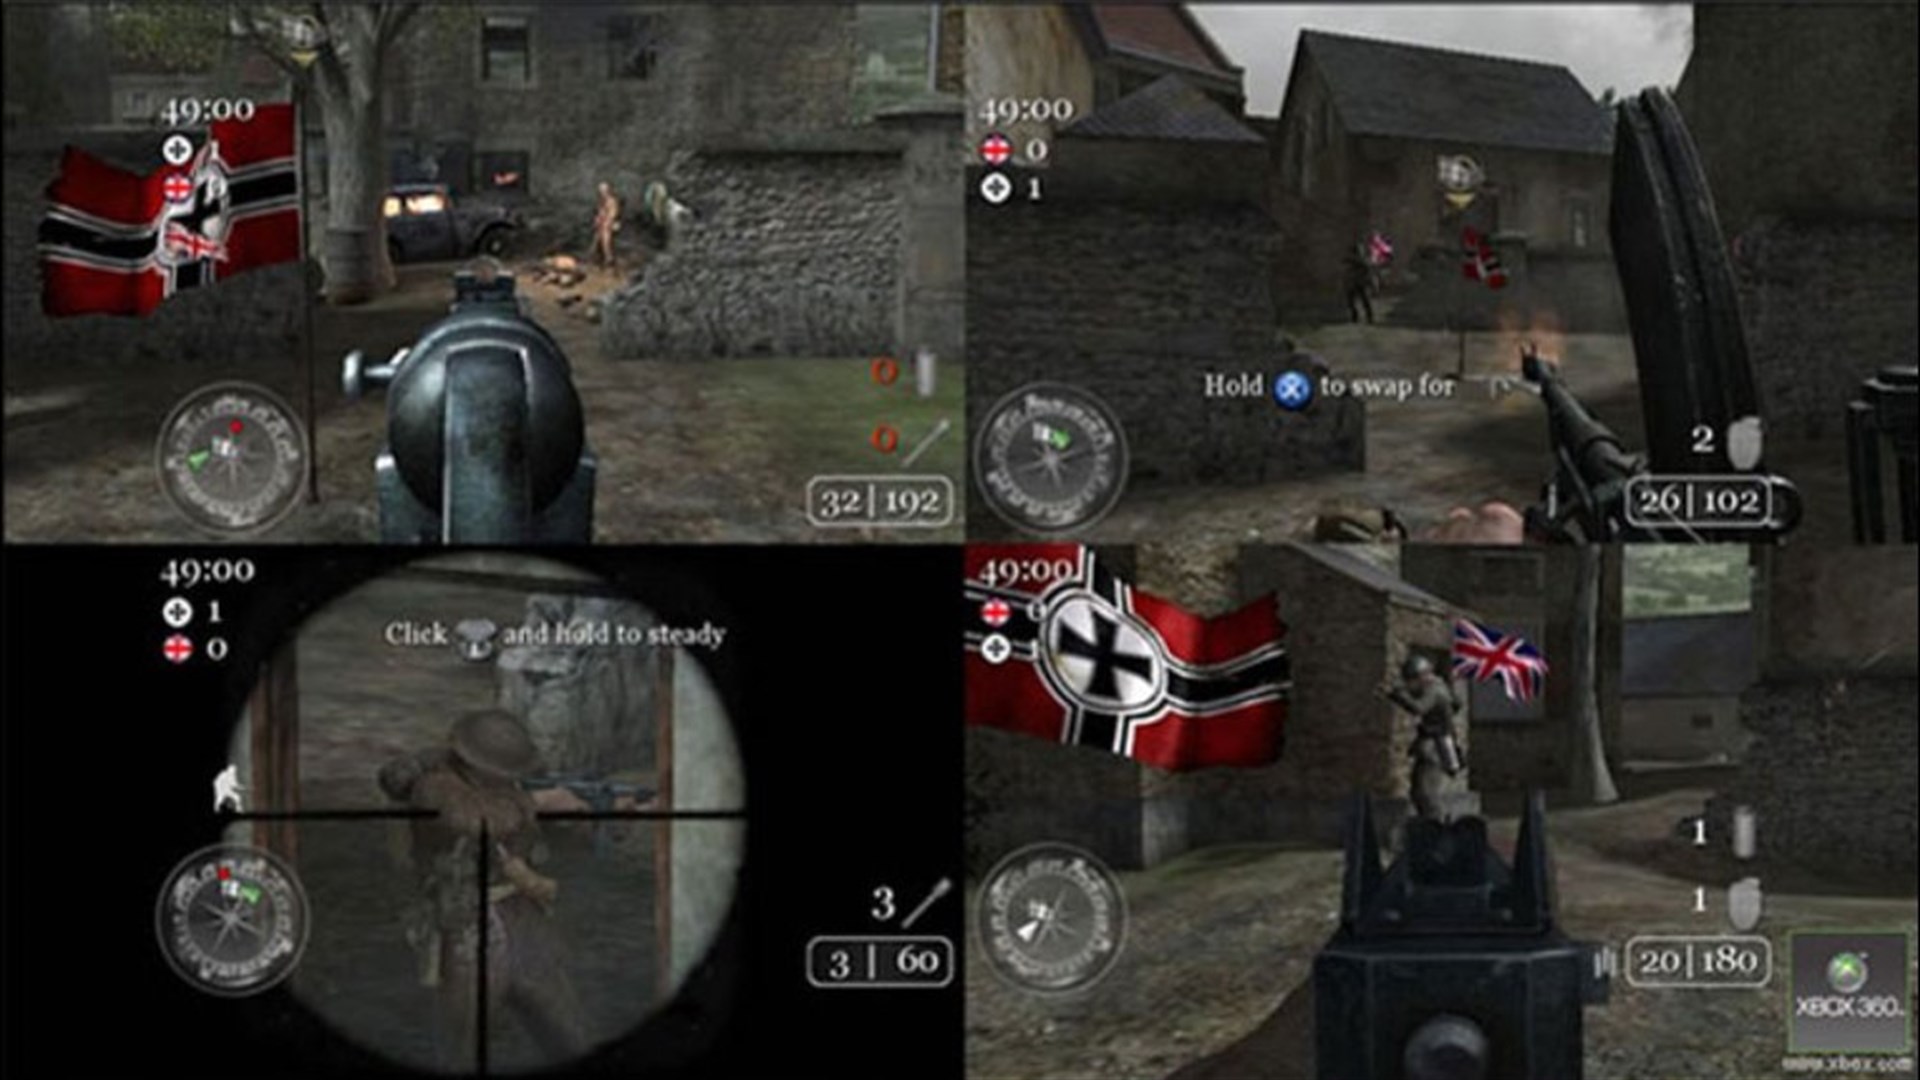 Игры на 2 игроков на пс. Call of Duty 4 Xbox 360 Split Screen. Шутеры на Xbox 360 Split Screen. Гонки Split Screen Xbox 360. Call of Duty Xbox 360.